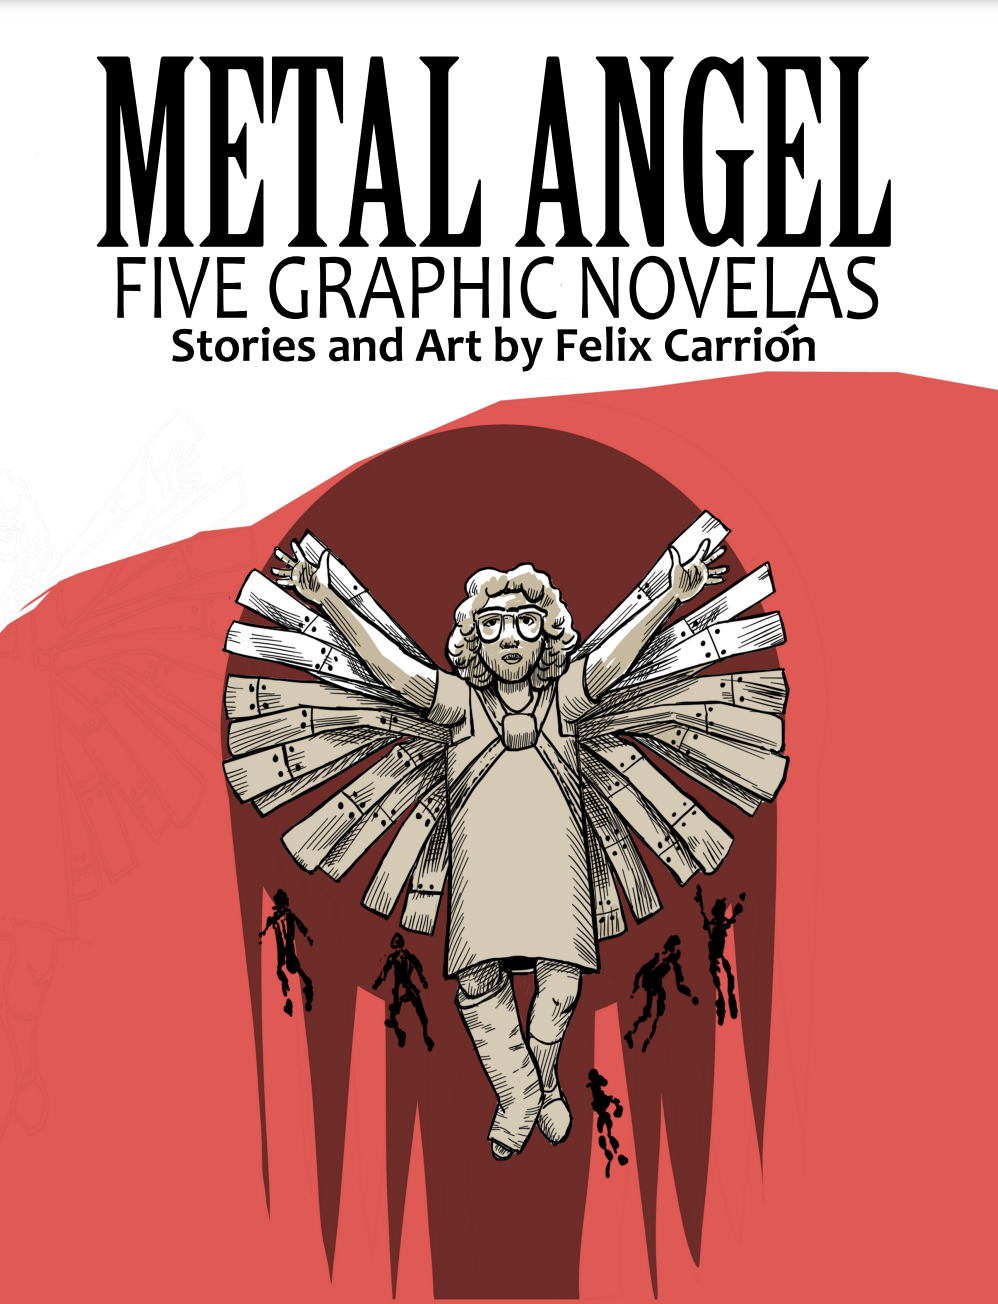 Metal Angel: Five Graphic Novellas by Felix Carrión